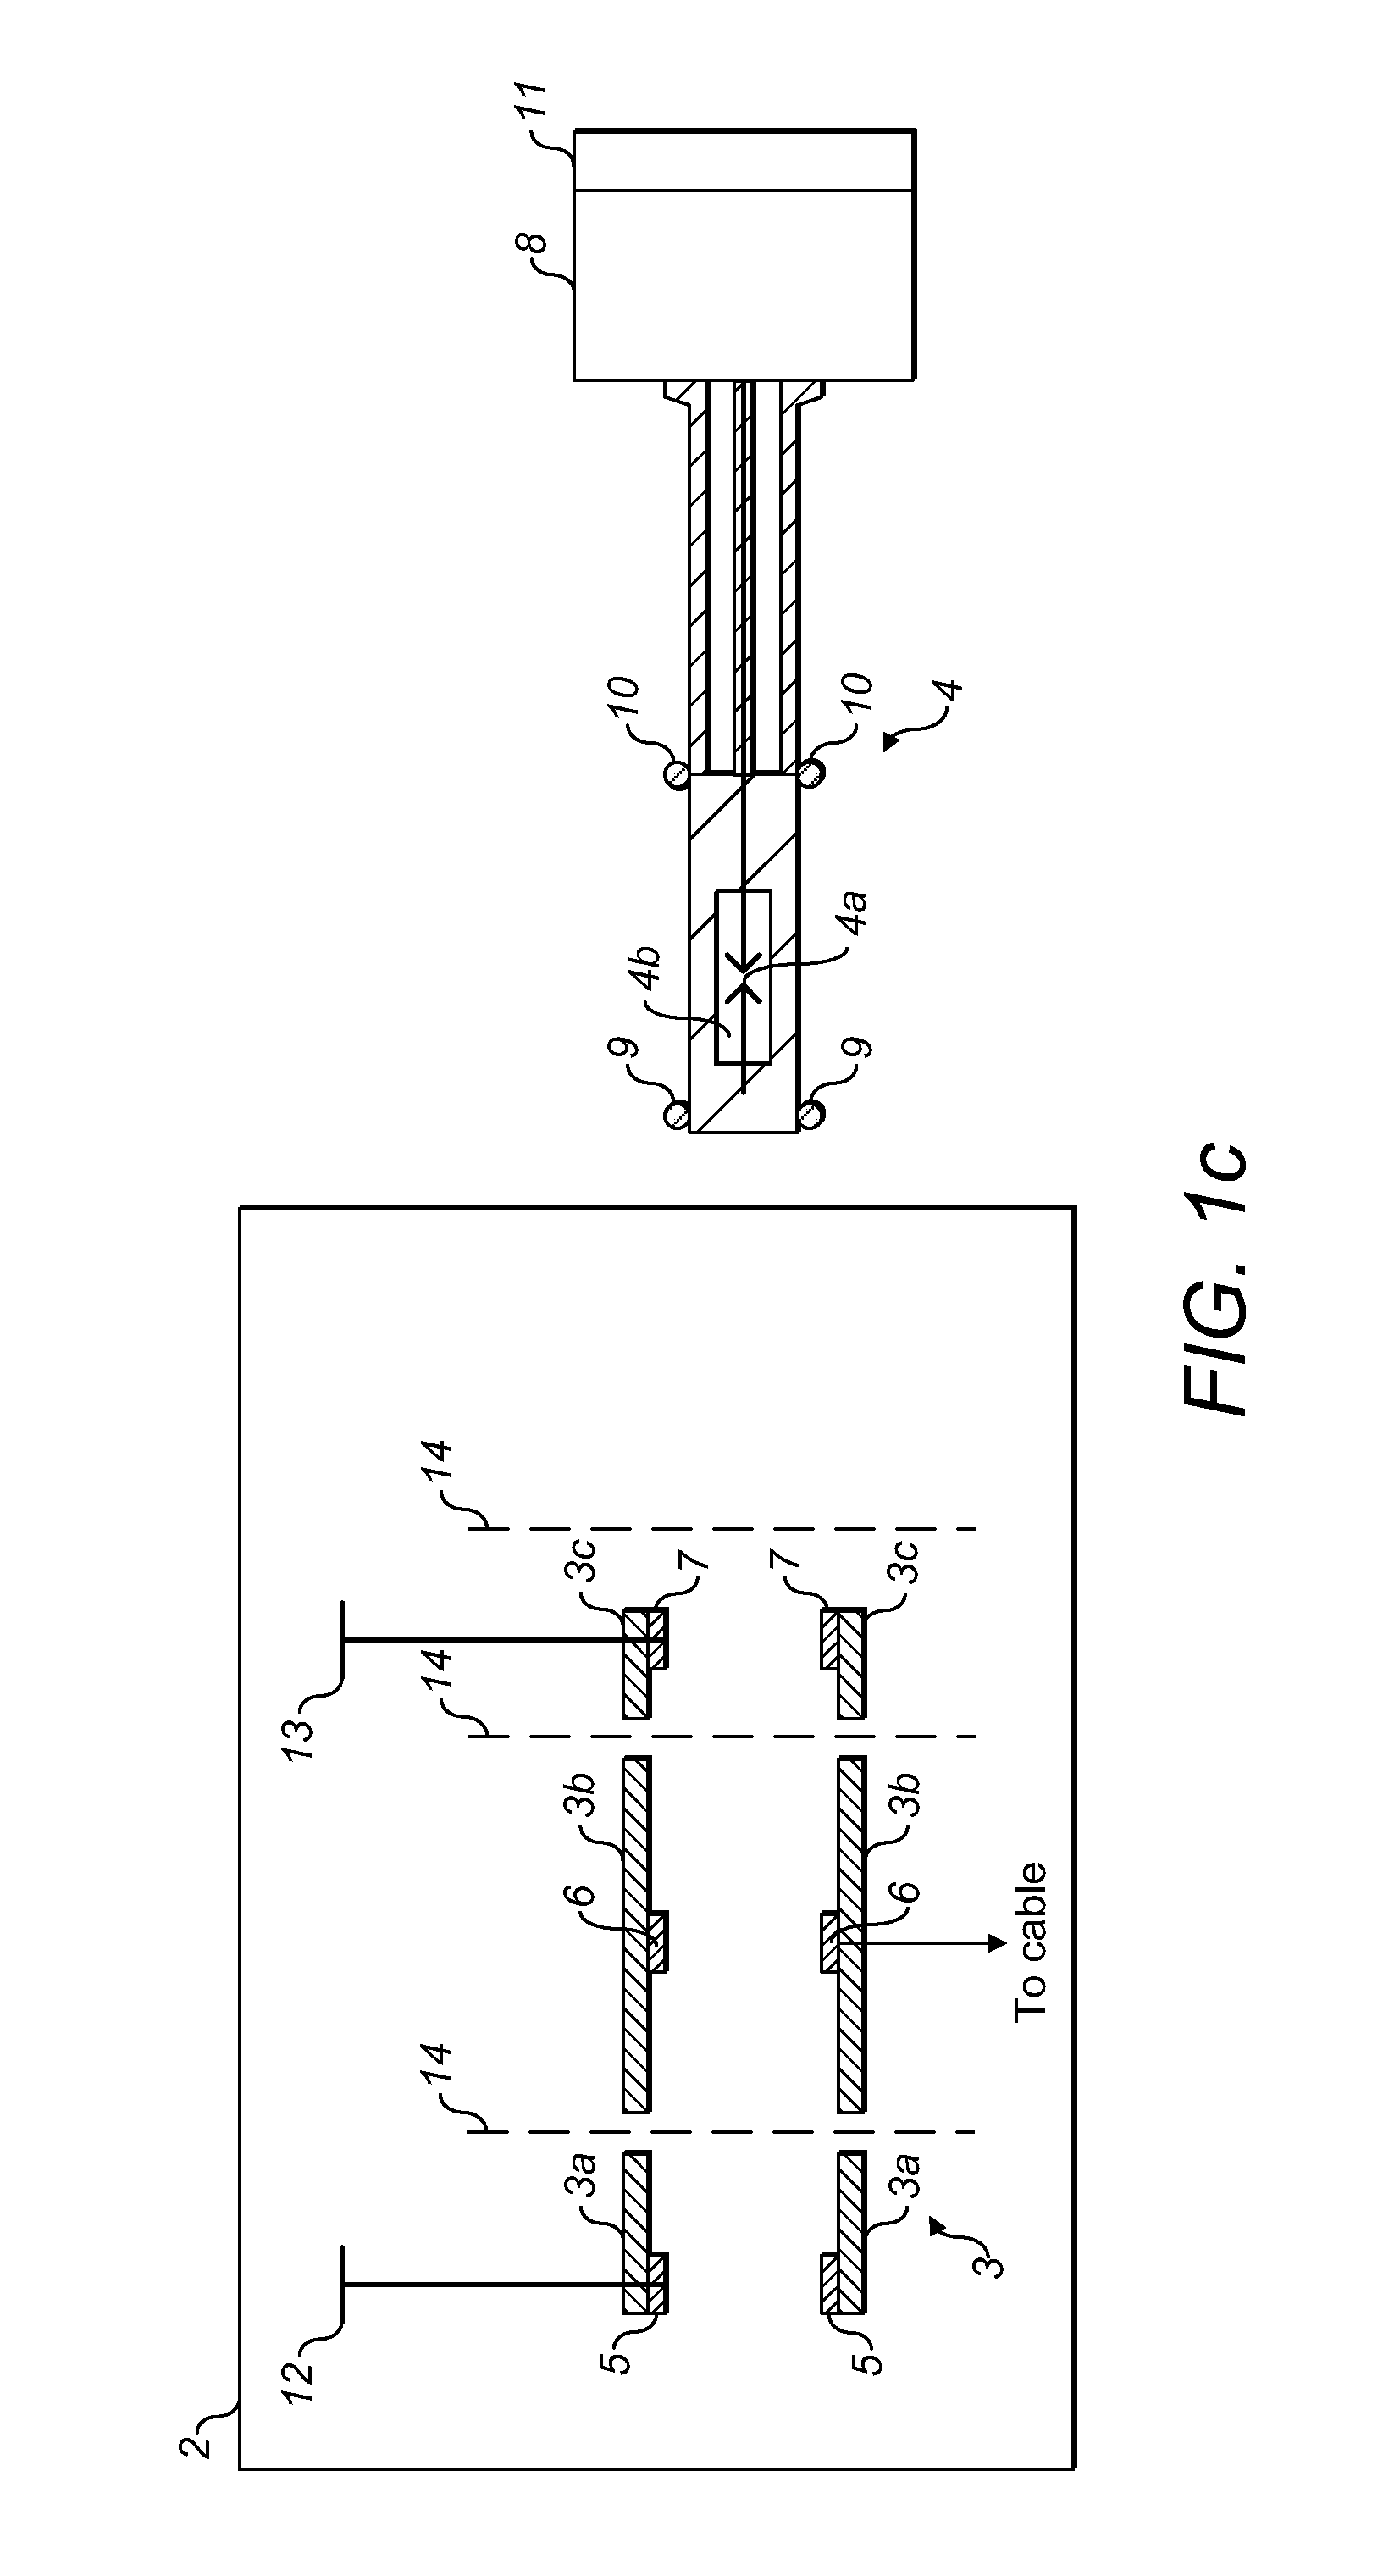 Switch arrangement for an electrical switchgear